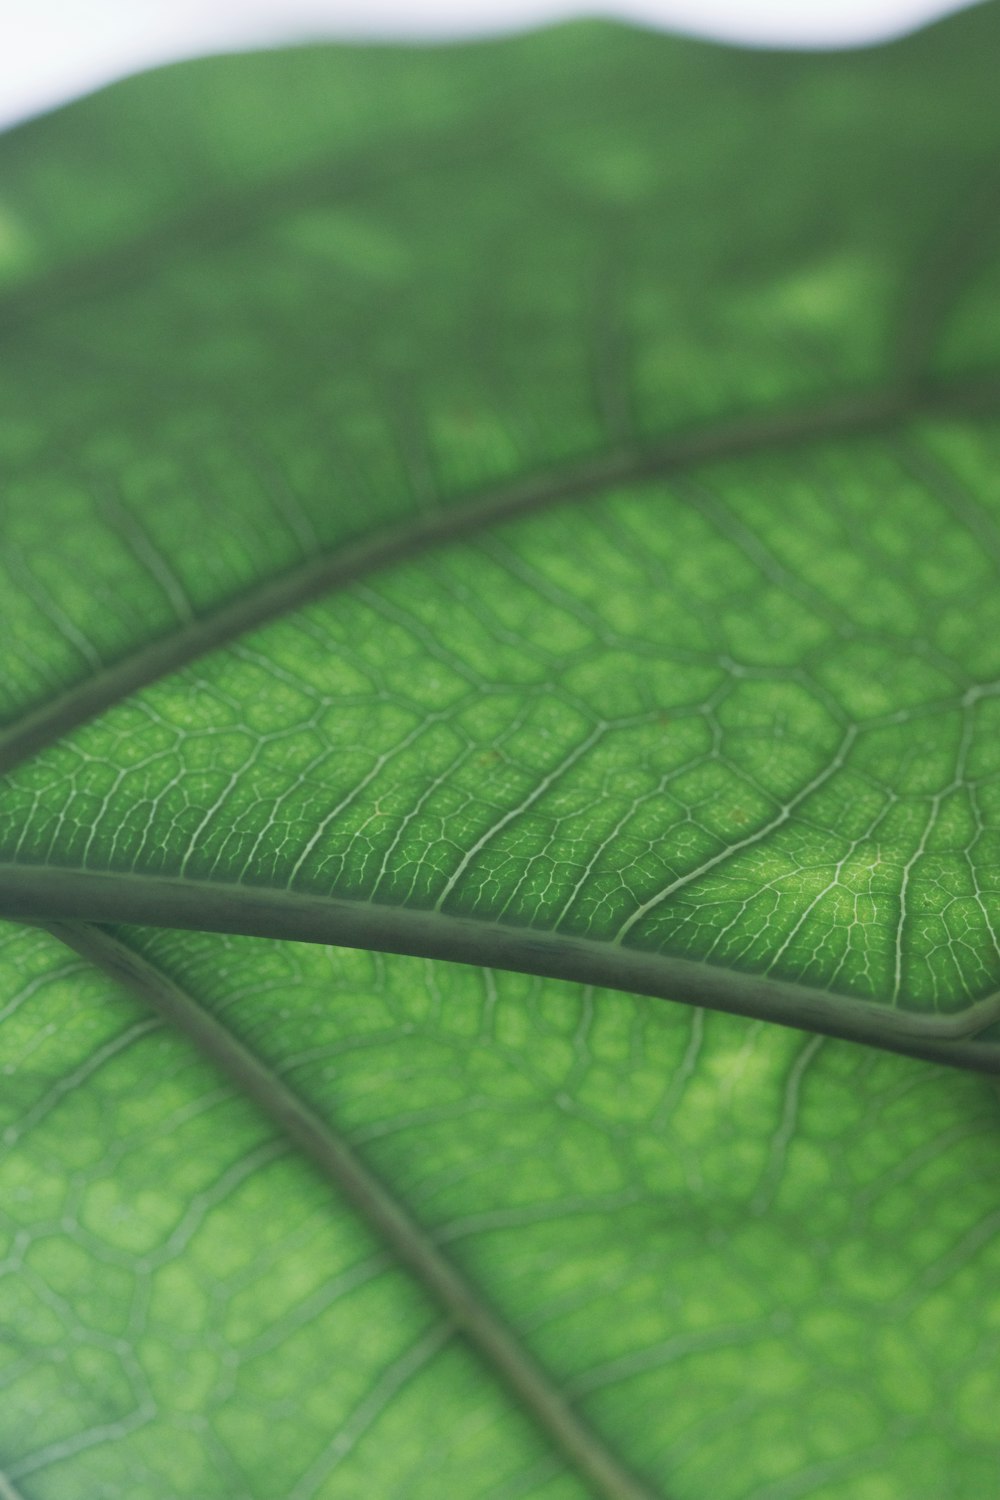 a close up of a green leaf